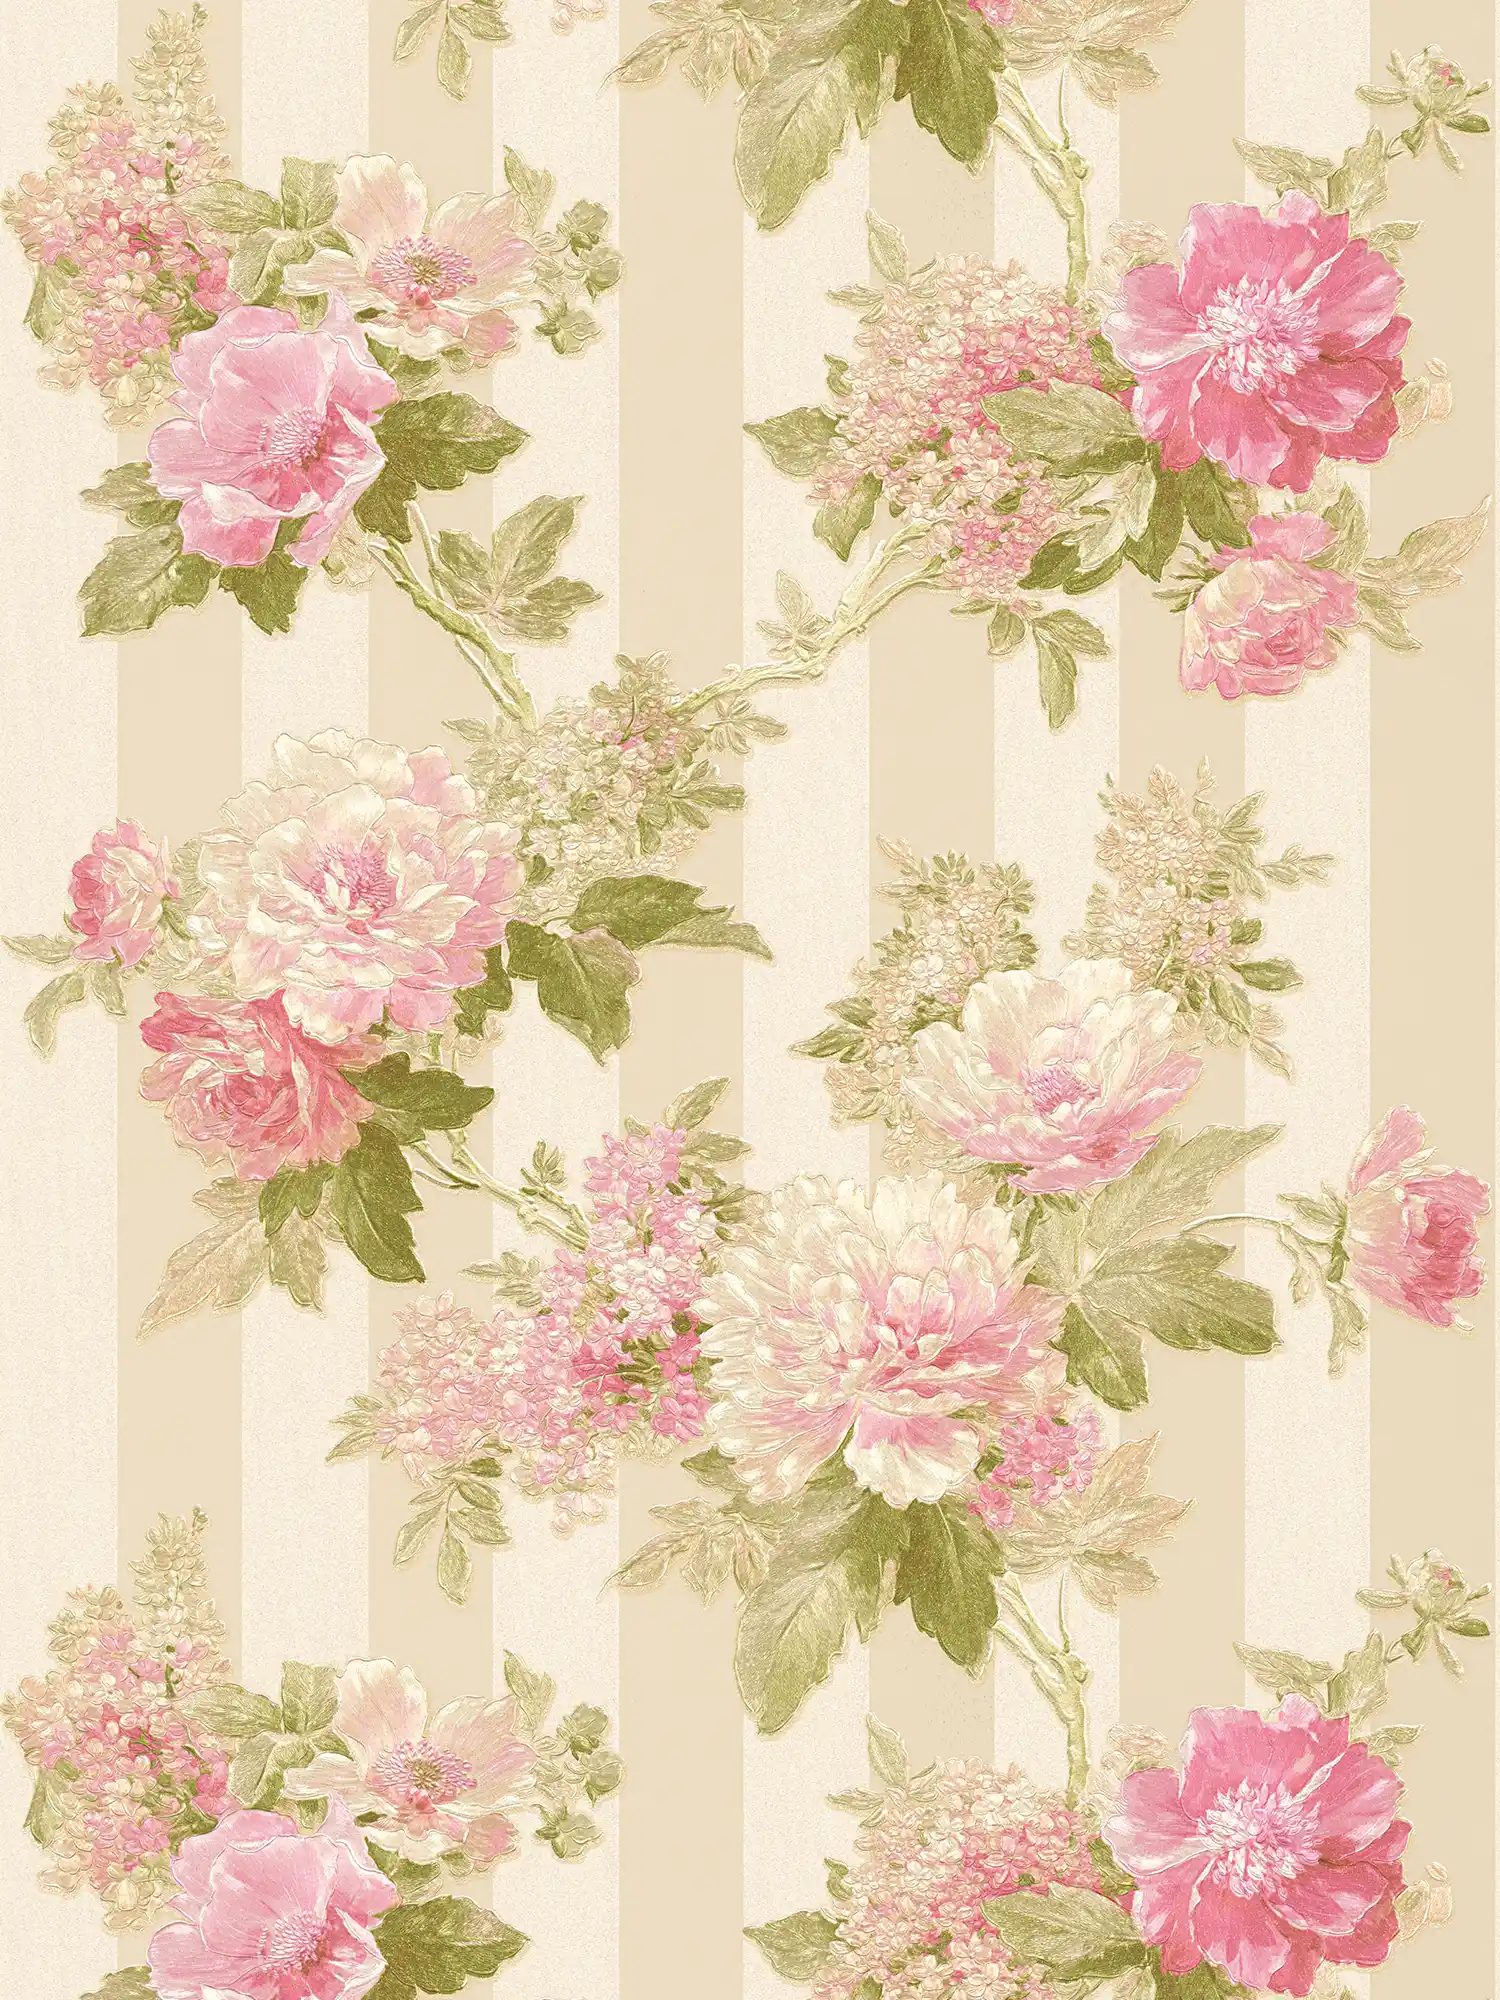 Wallpaper floral motif and stripe design - pink, green, cream
